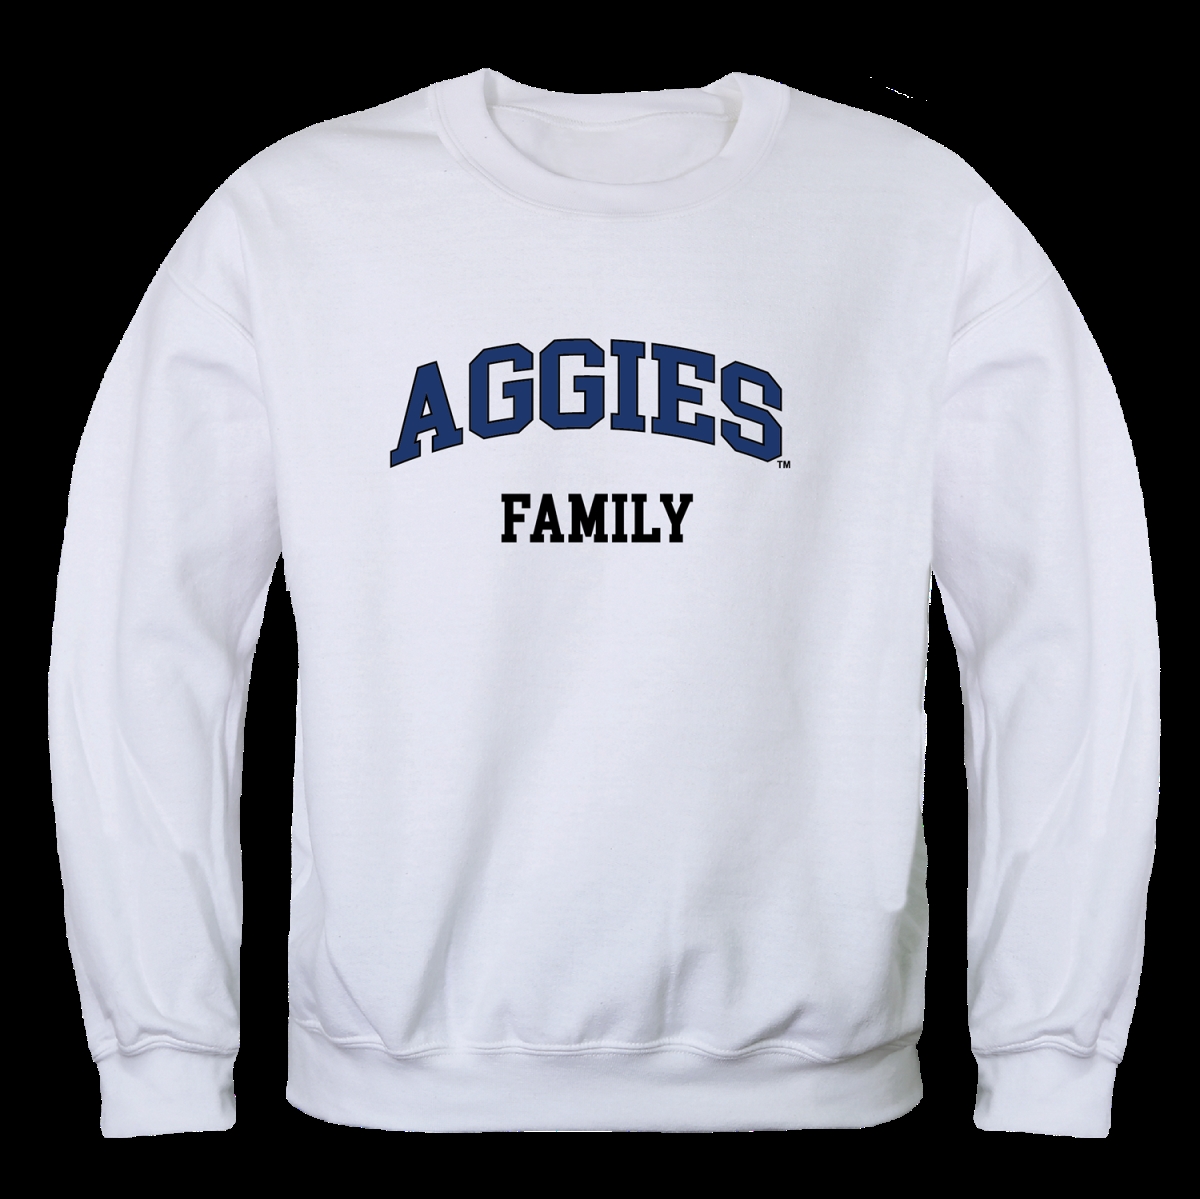 W Republic 572-470-WHT-02 North Carolina A&T State University Aggies Family Crewneck Sweatshirt&#44; White - Medium